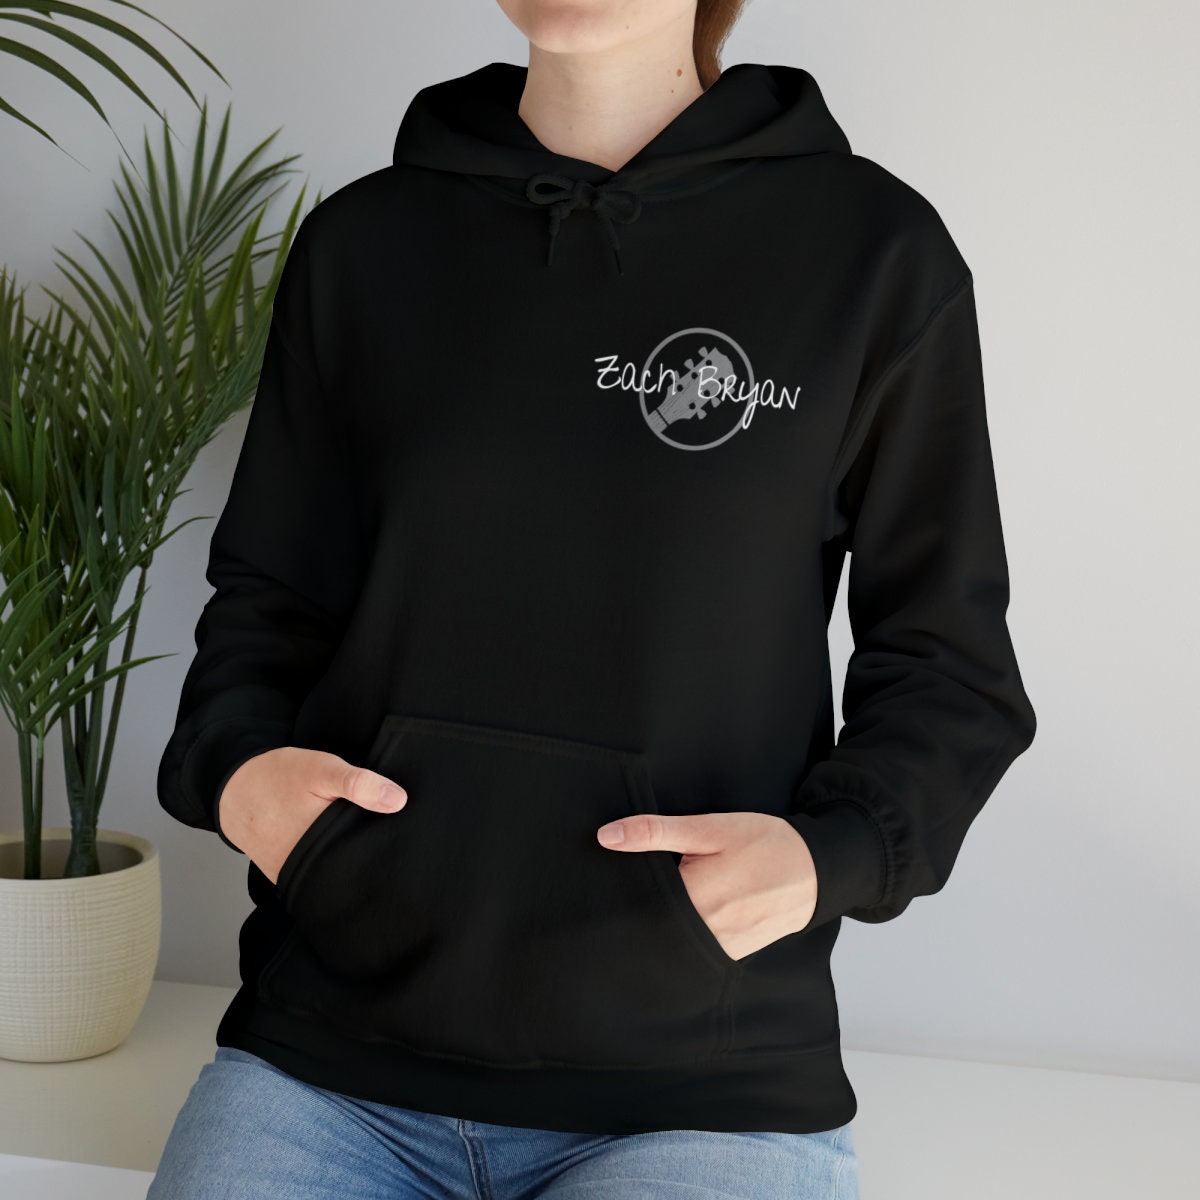 Mugshot Hoodie - Gift - Funny hoodie - Sweatshirt